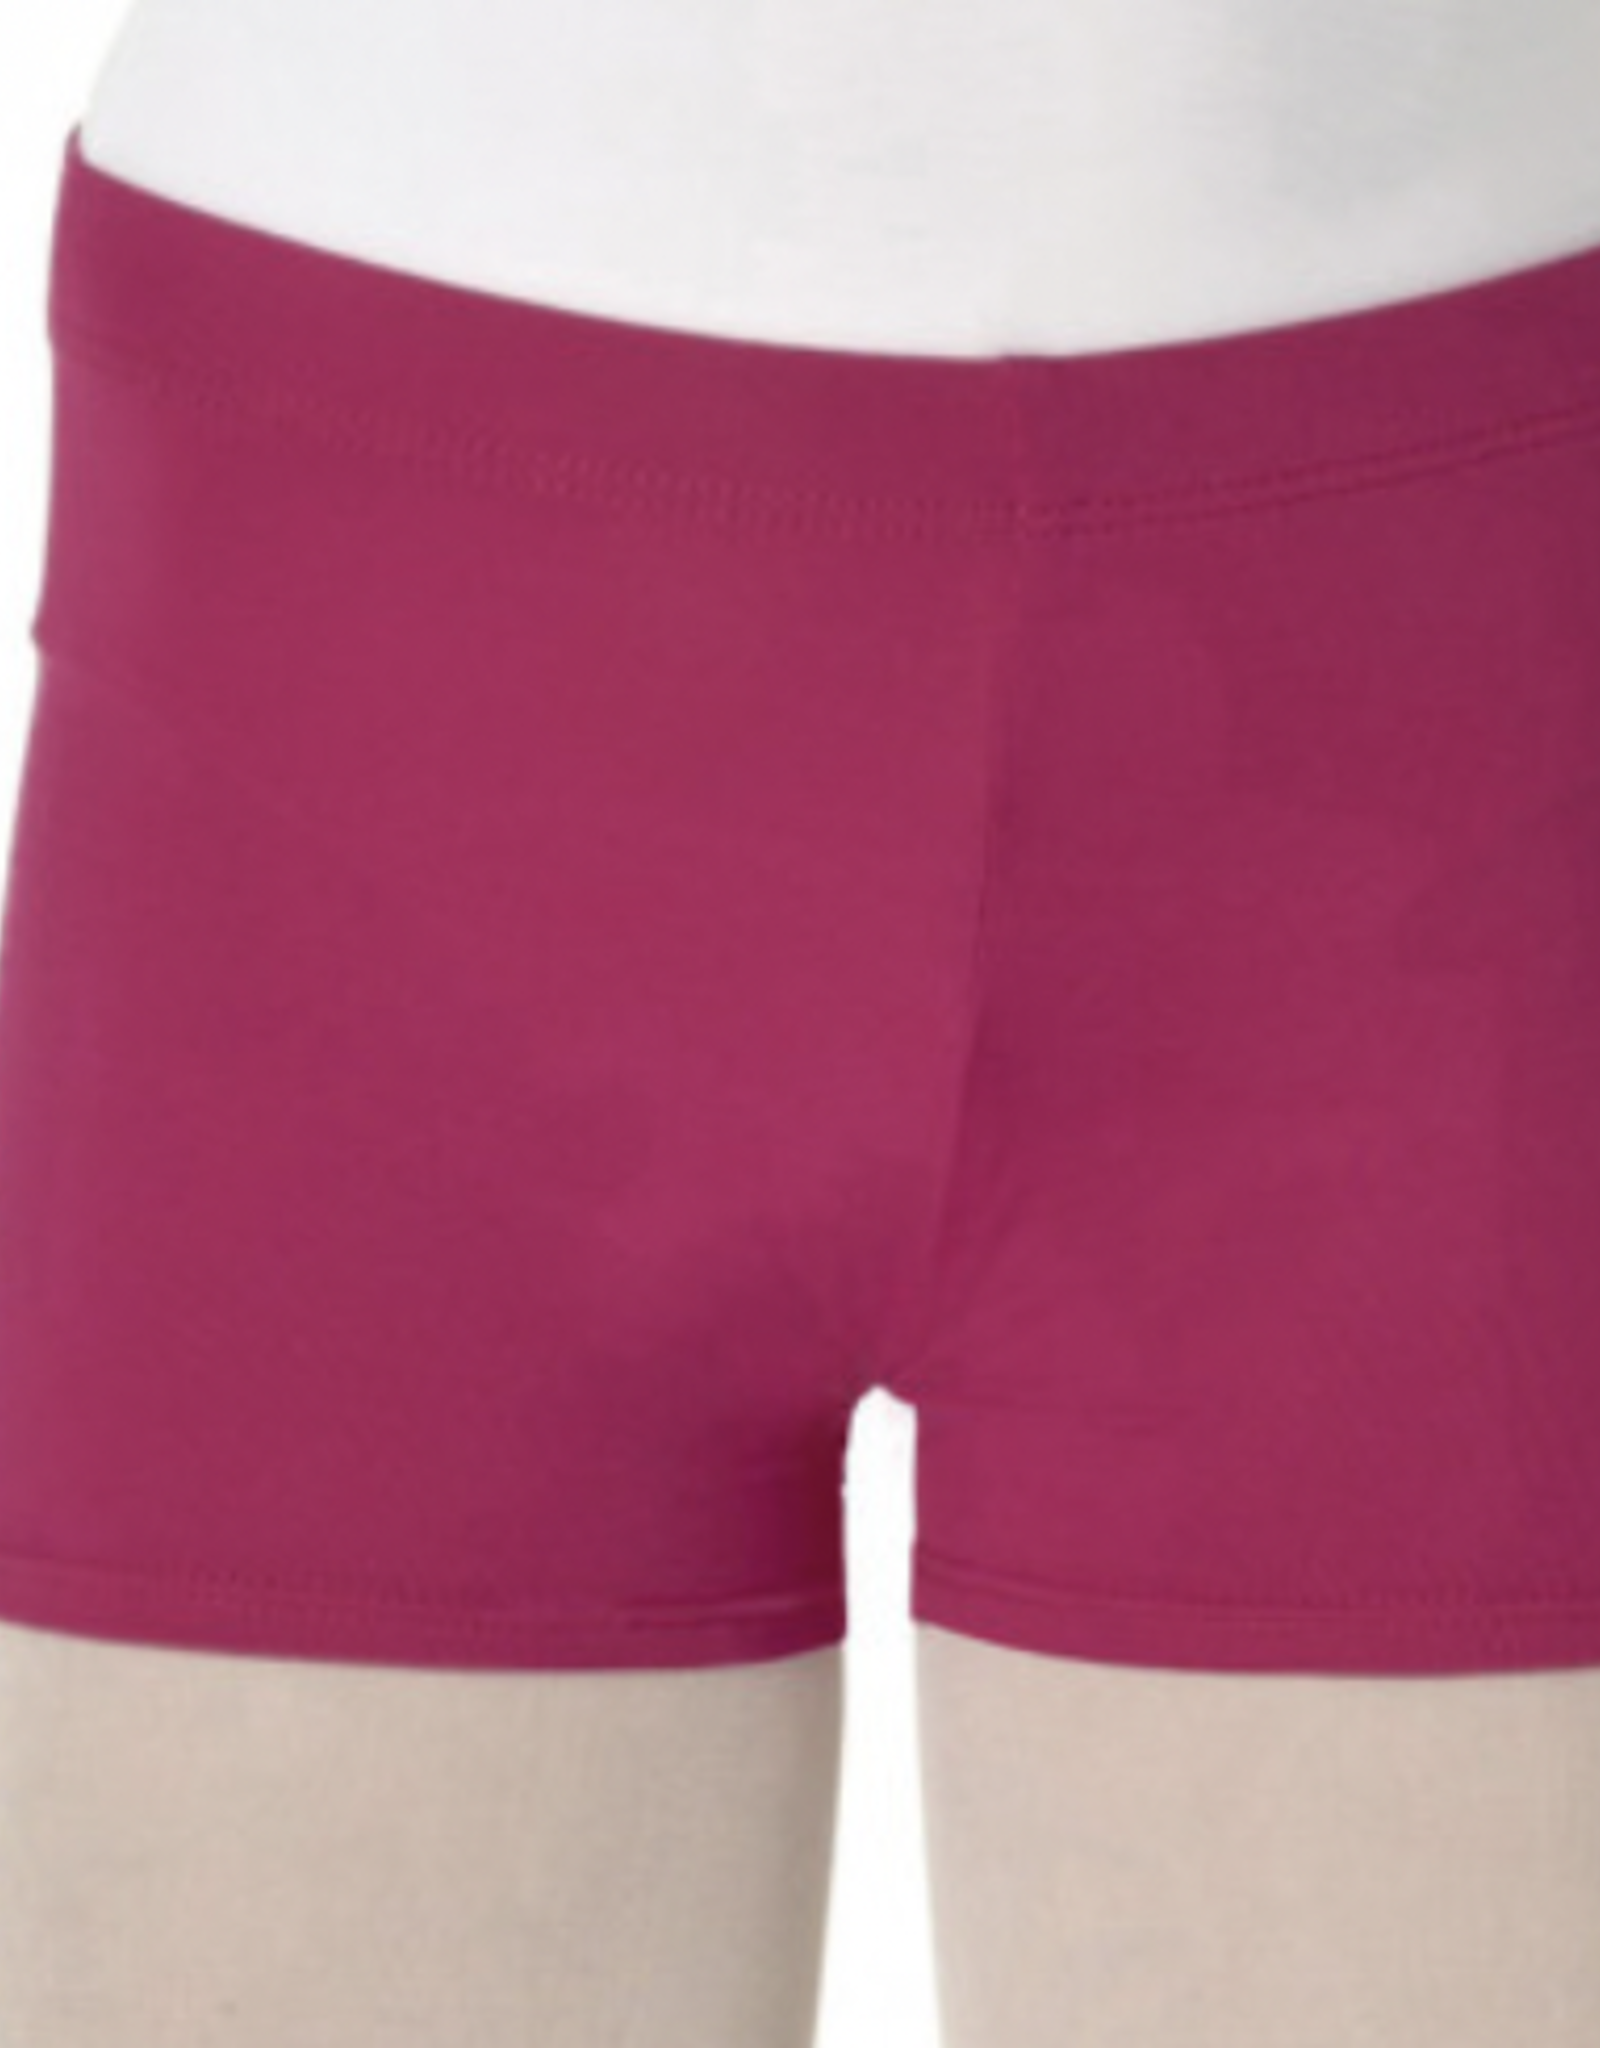 Wear Moi Ladies' Gipsy Shorts